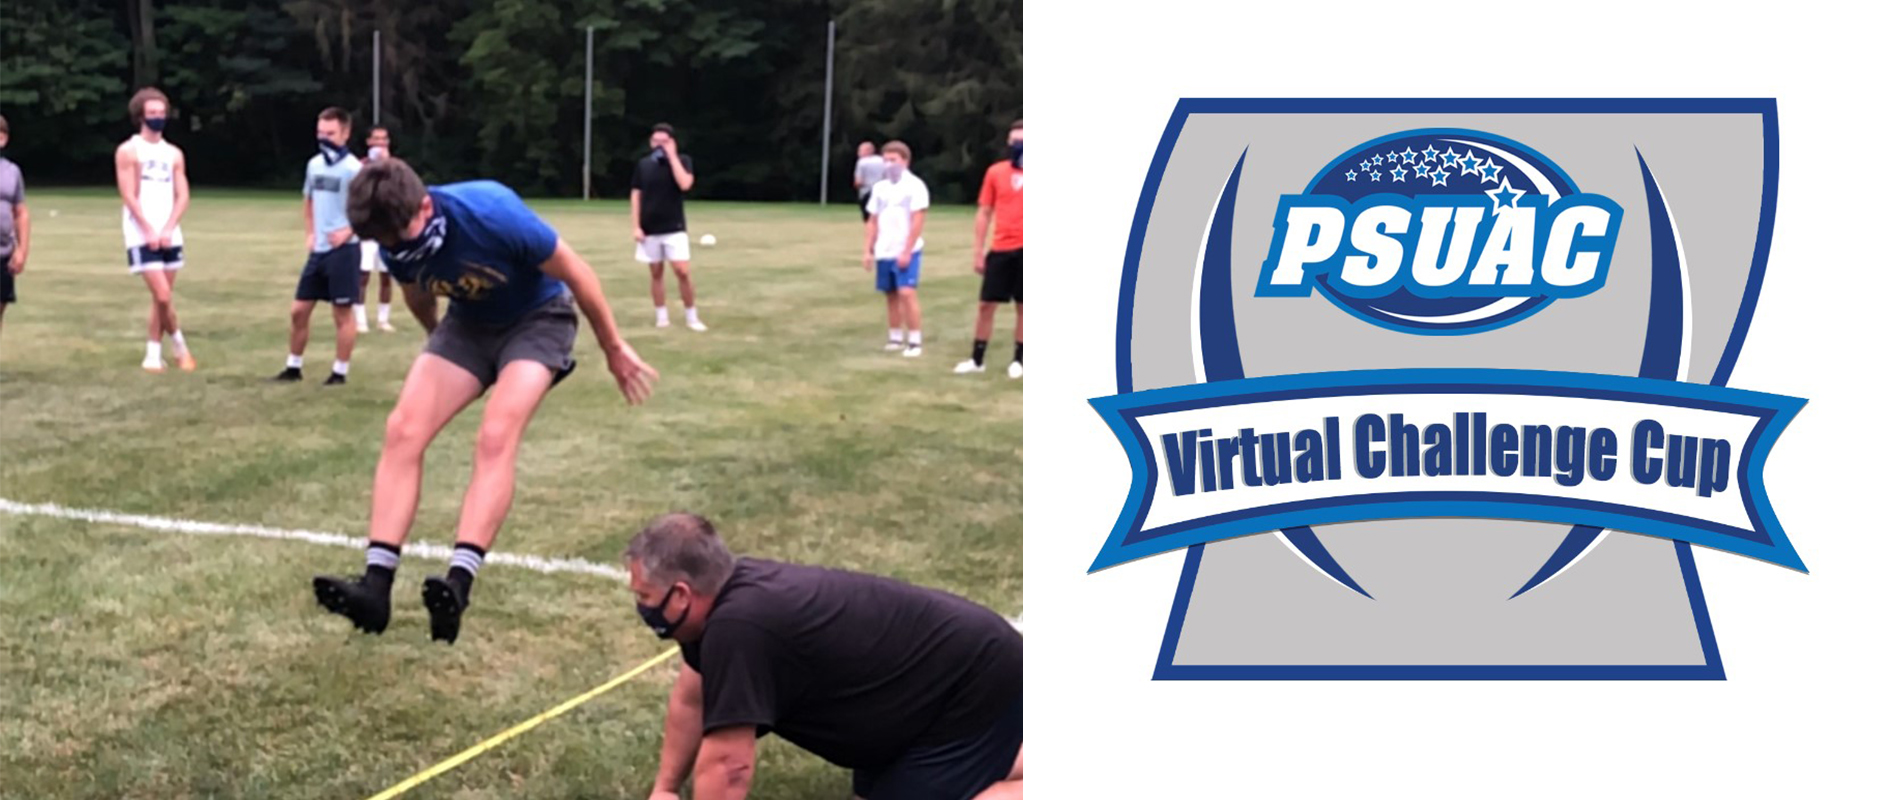 Penn State Mont Alto won the 2020 PSUAC Virtual Challenge Cup.